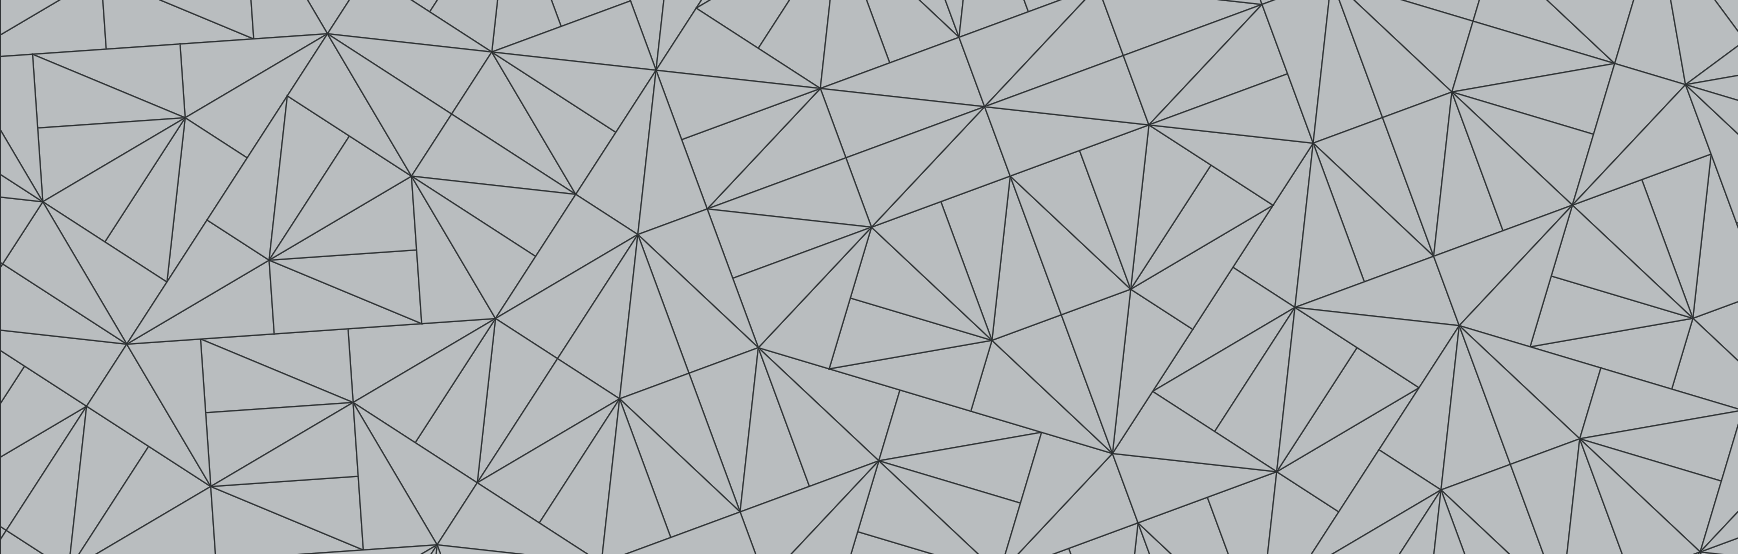 A pinwheel tiling